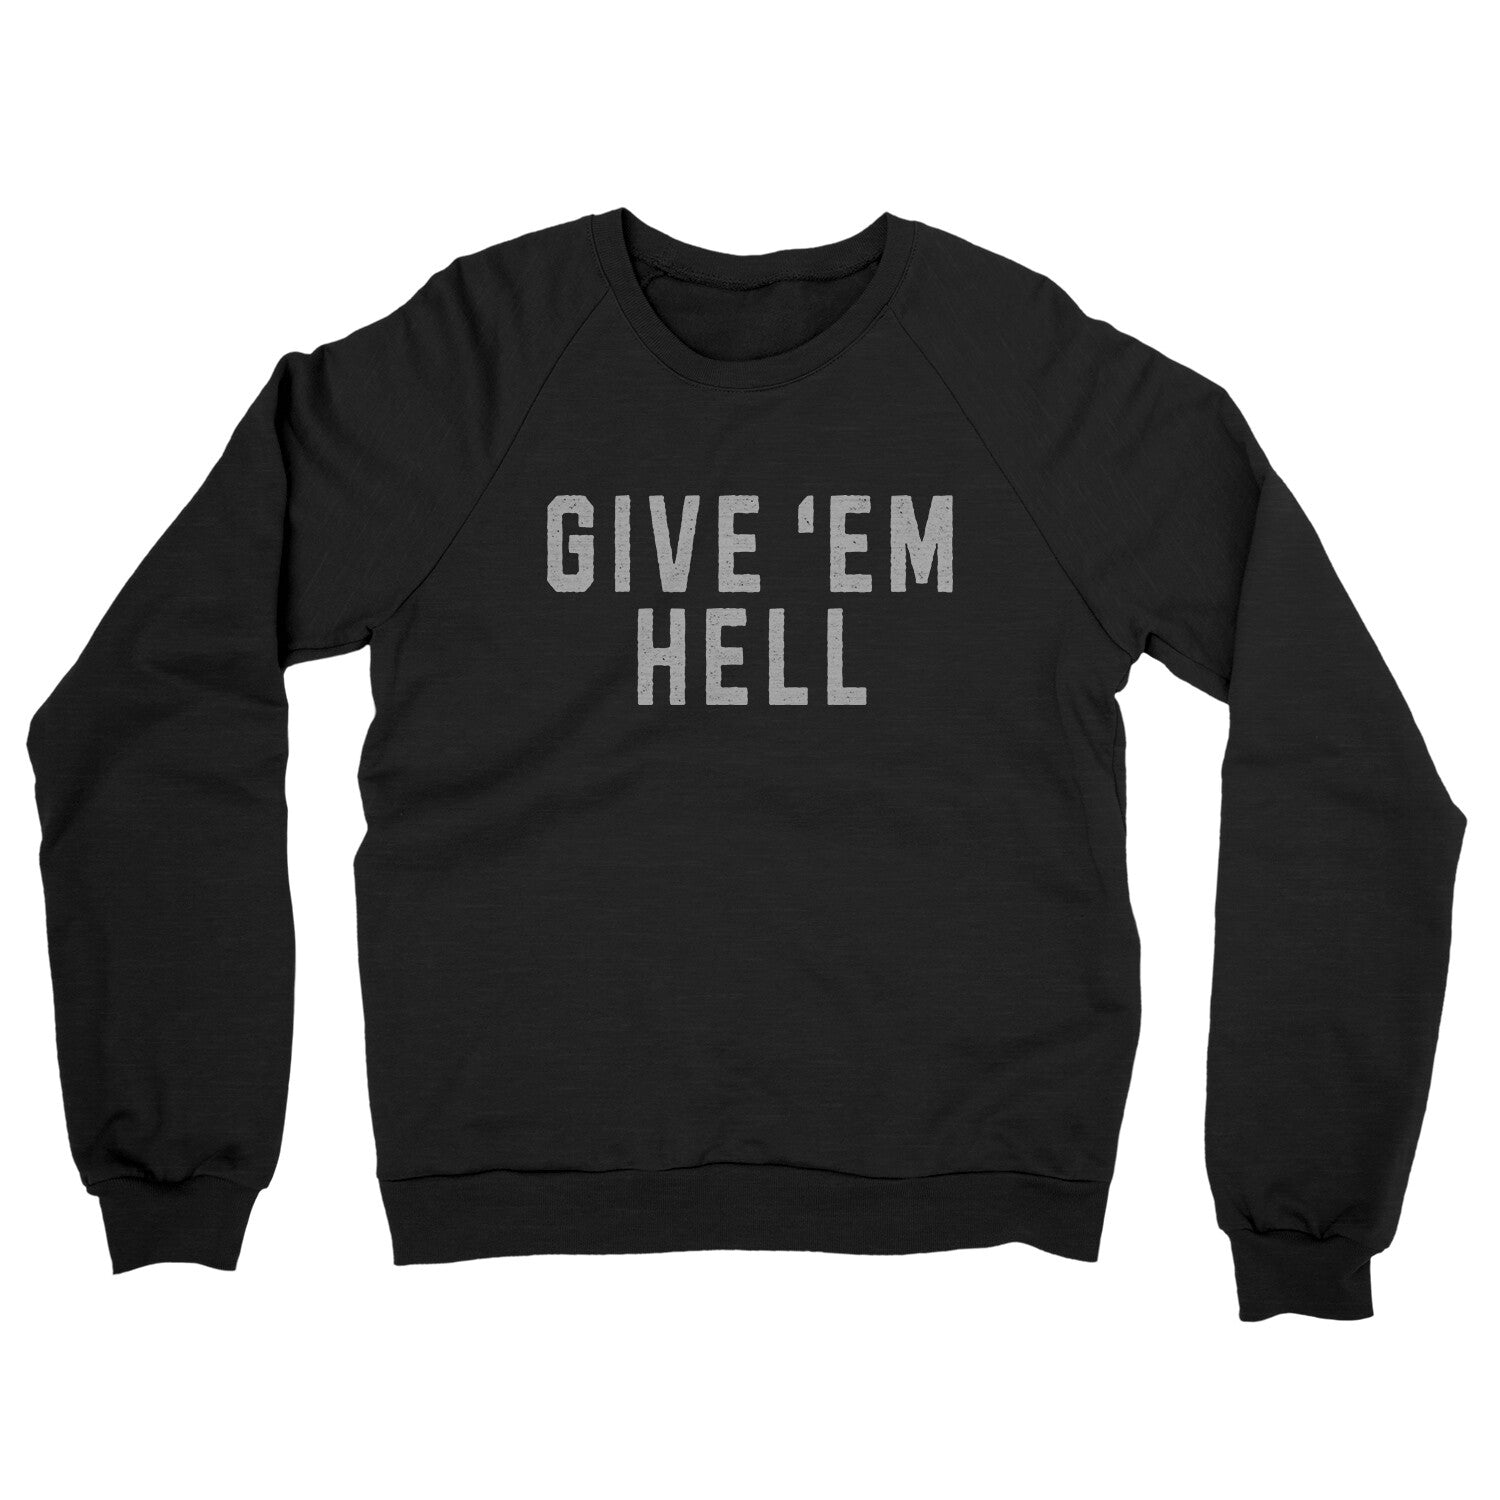 Give ‘em Hell in Black Color